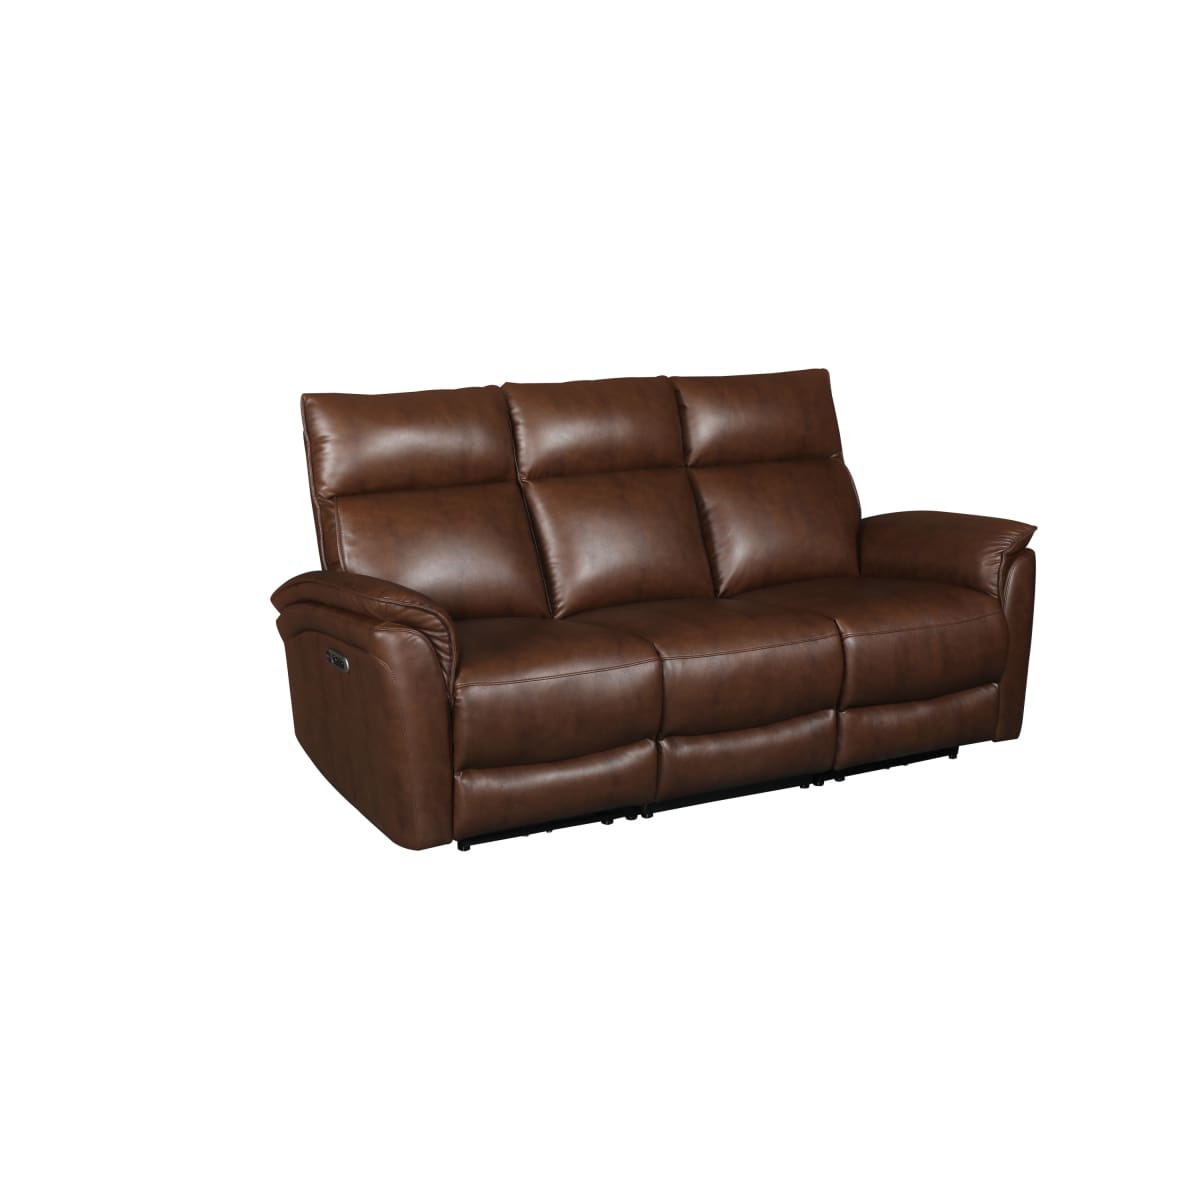 Roland Brown Power recliner Sofa - Sofa